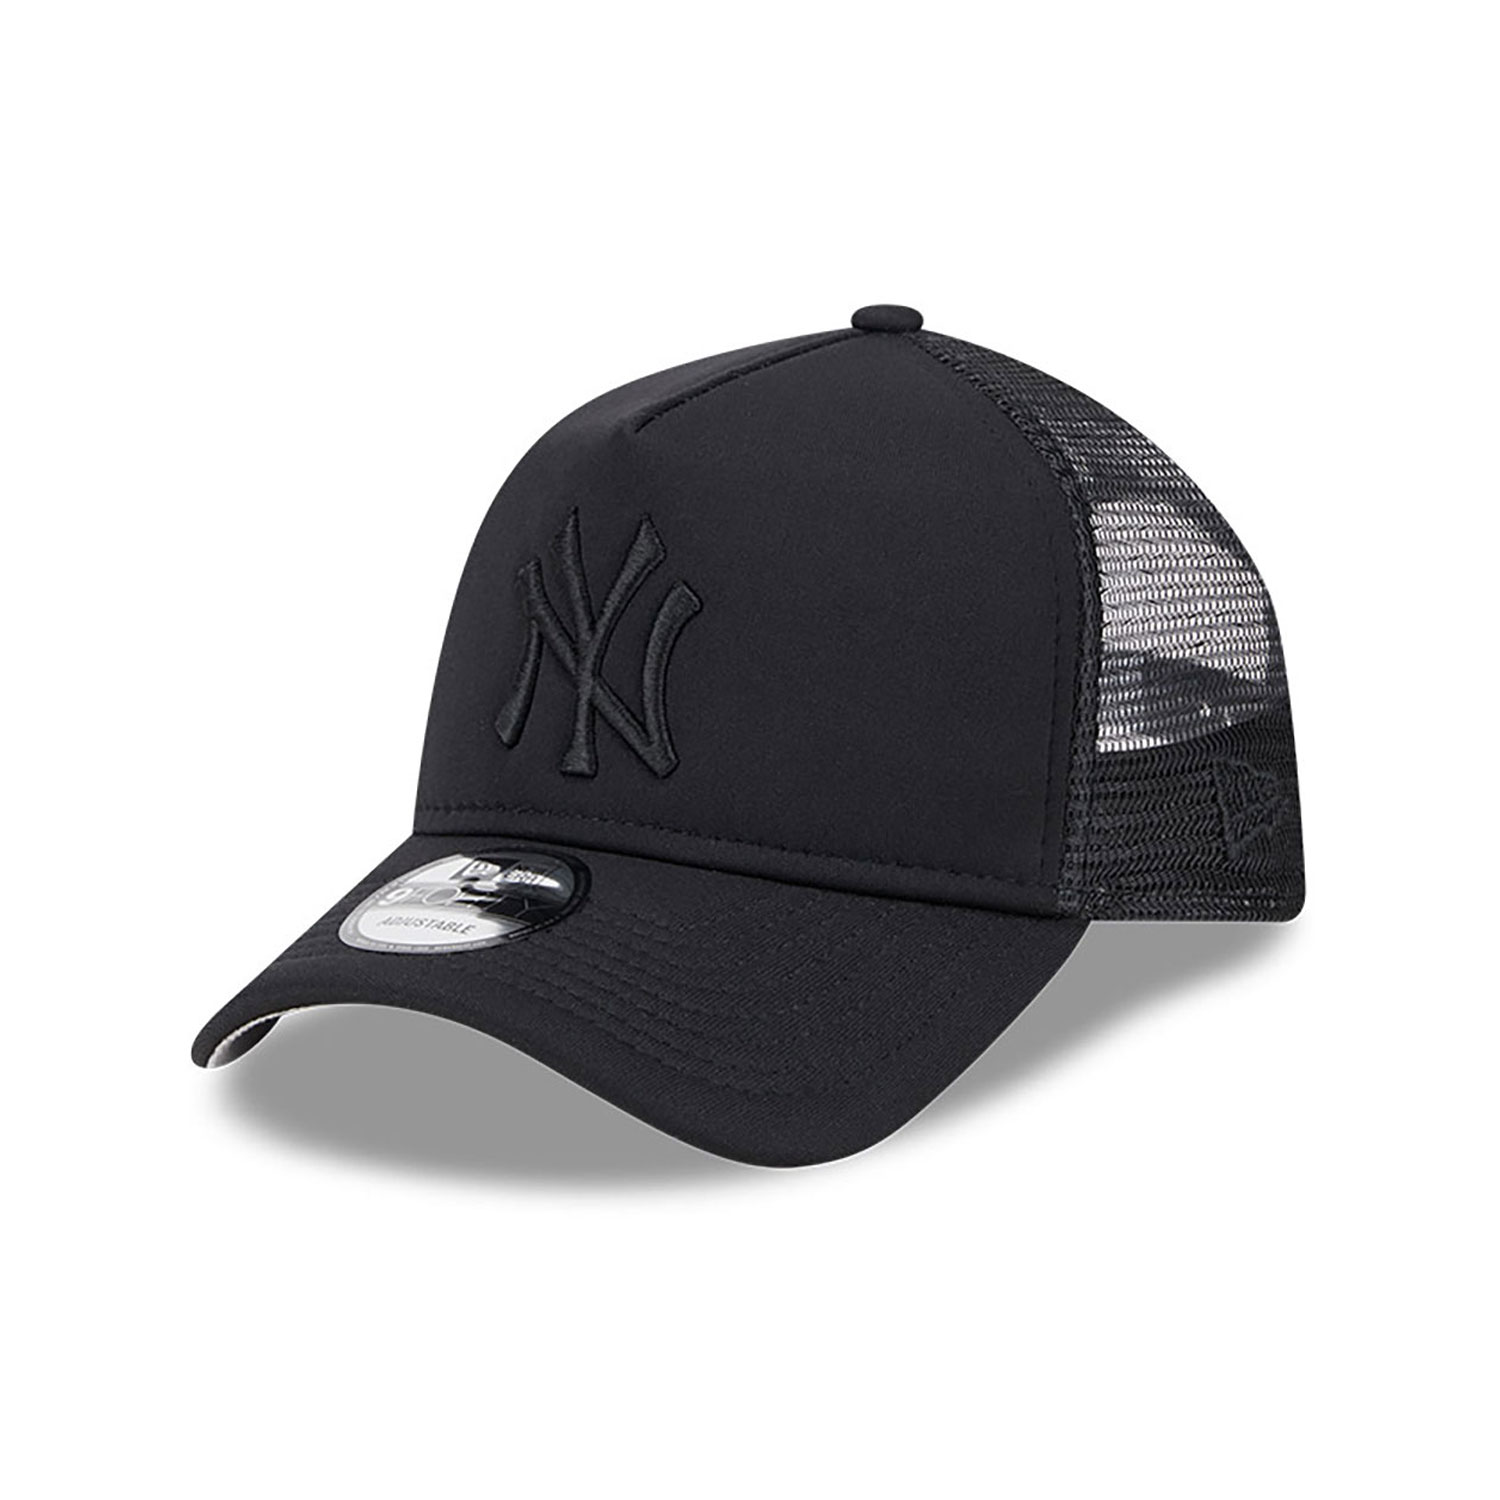 NY Cap Black | Black Yankees Cap | New Era Cap NL